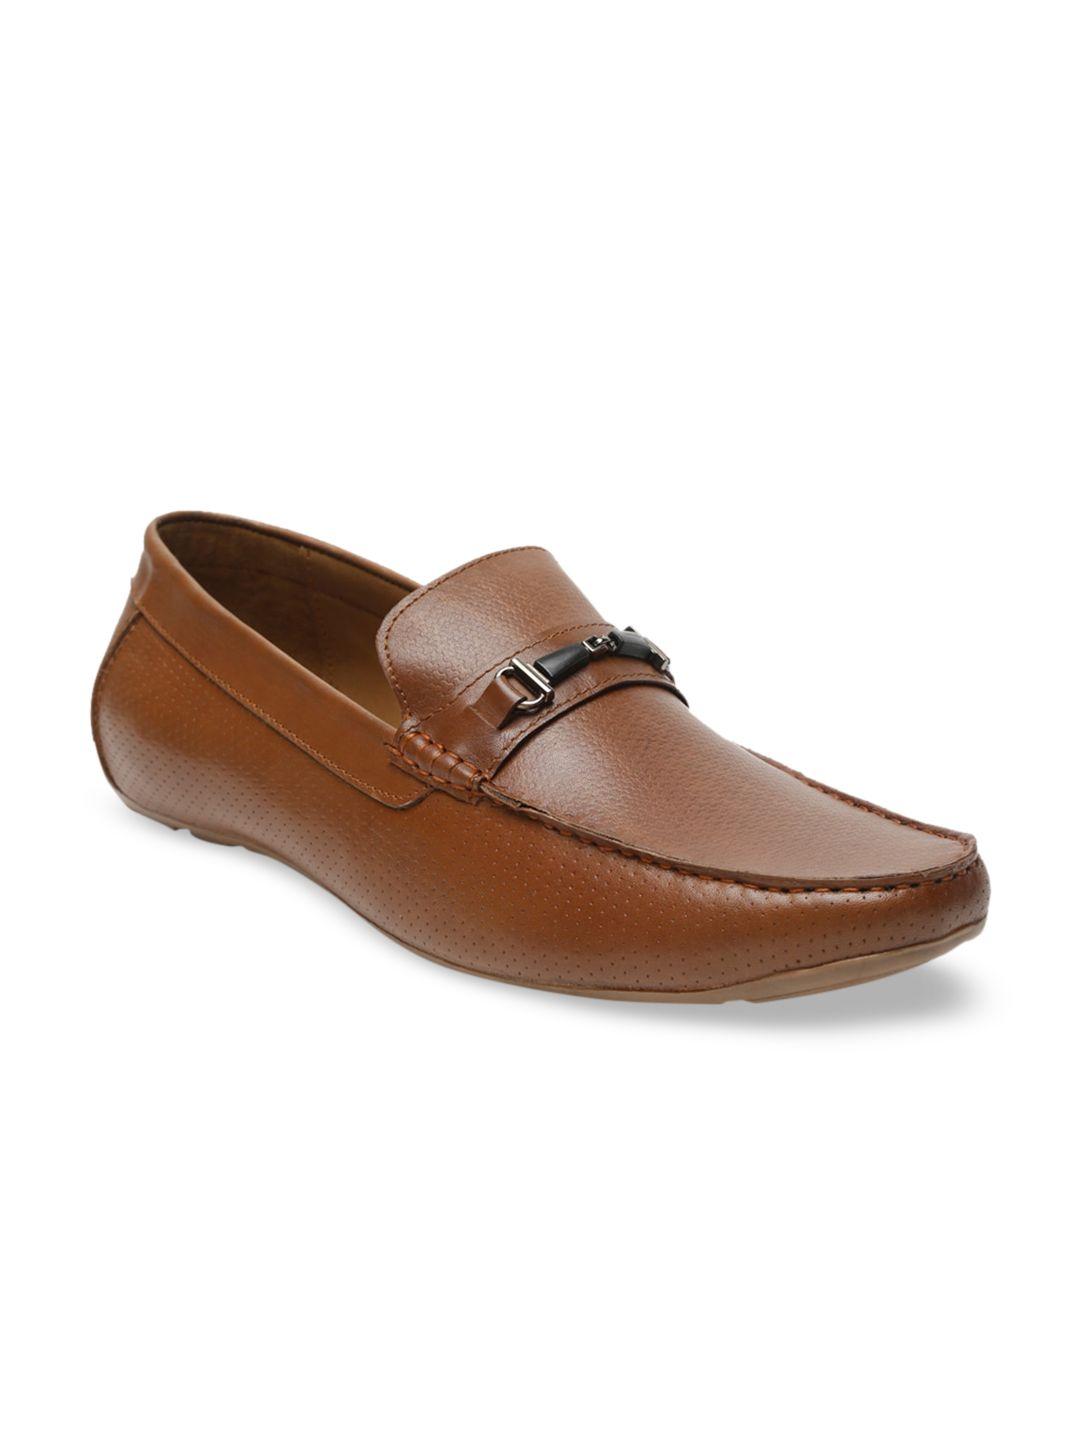 teakwood leathers men tan-brown textured genuine leather formal loafers